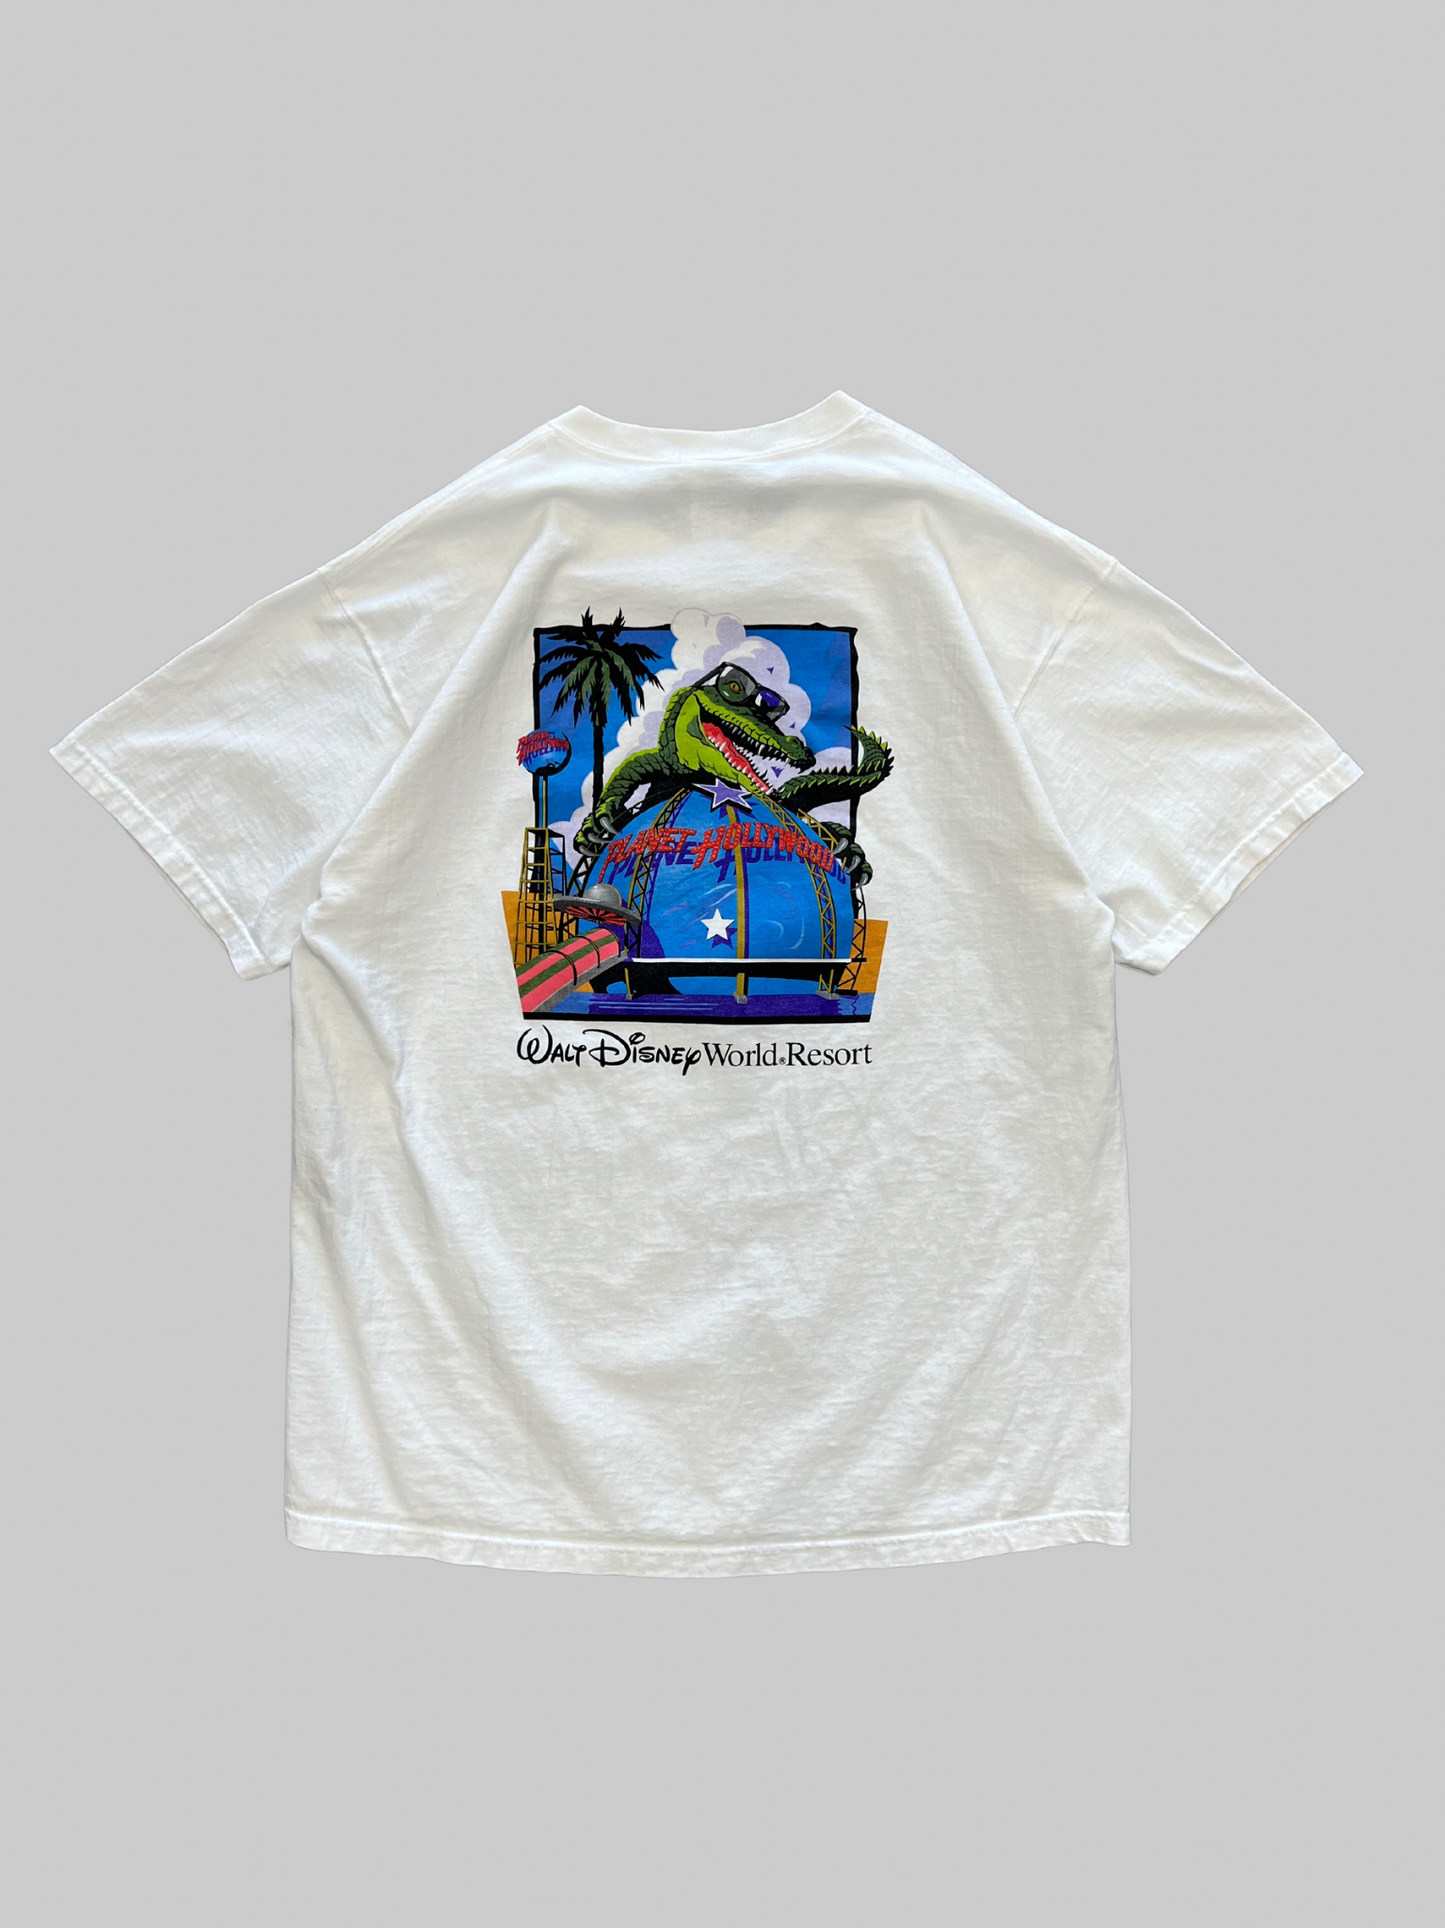 White 98’ Disney Planet Hollywood T-Shirt (XL)